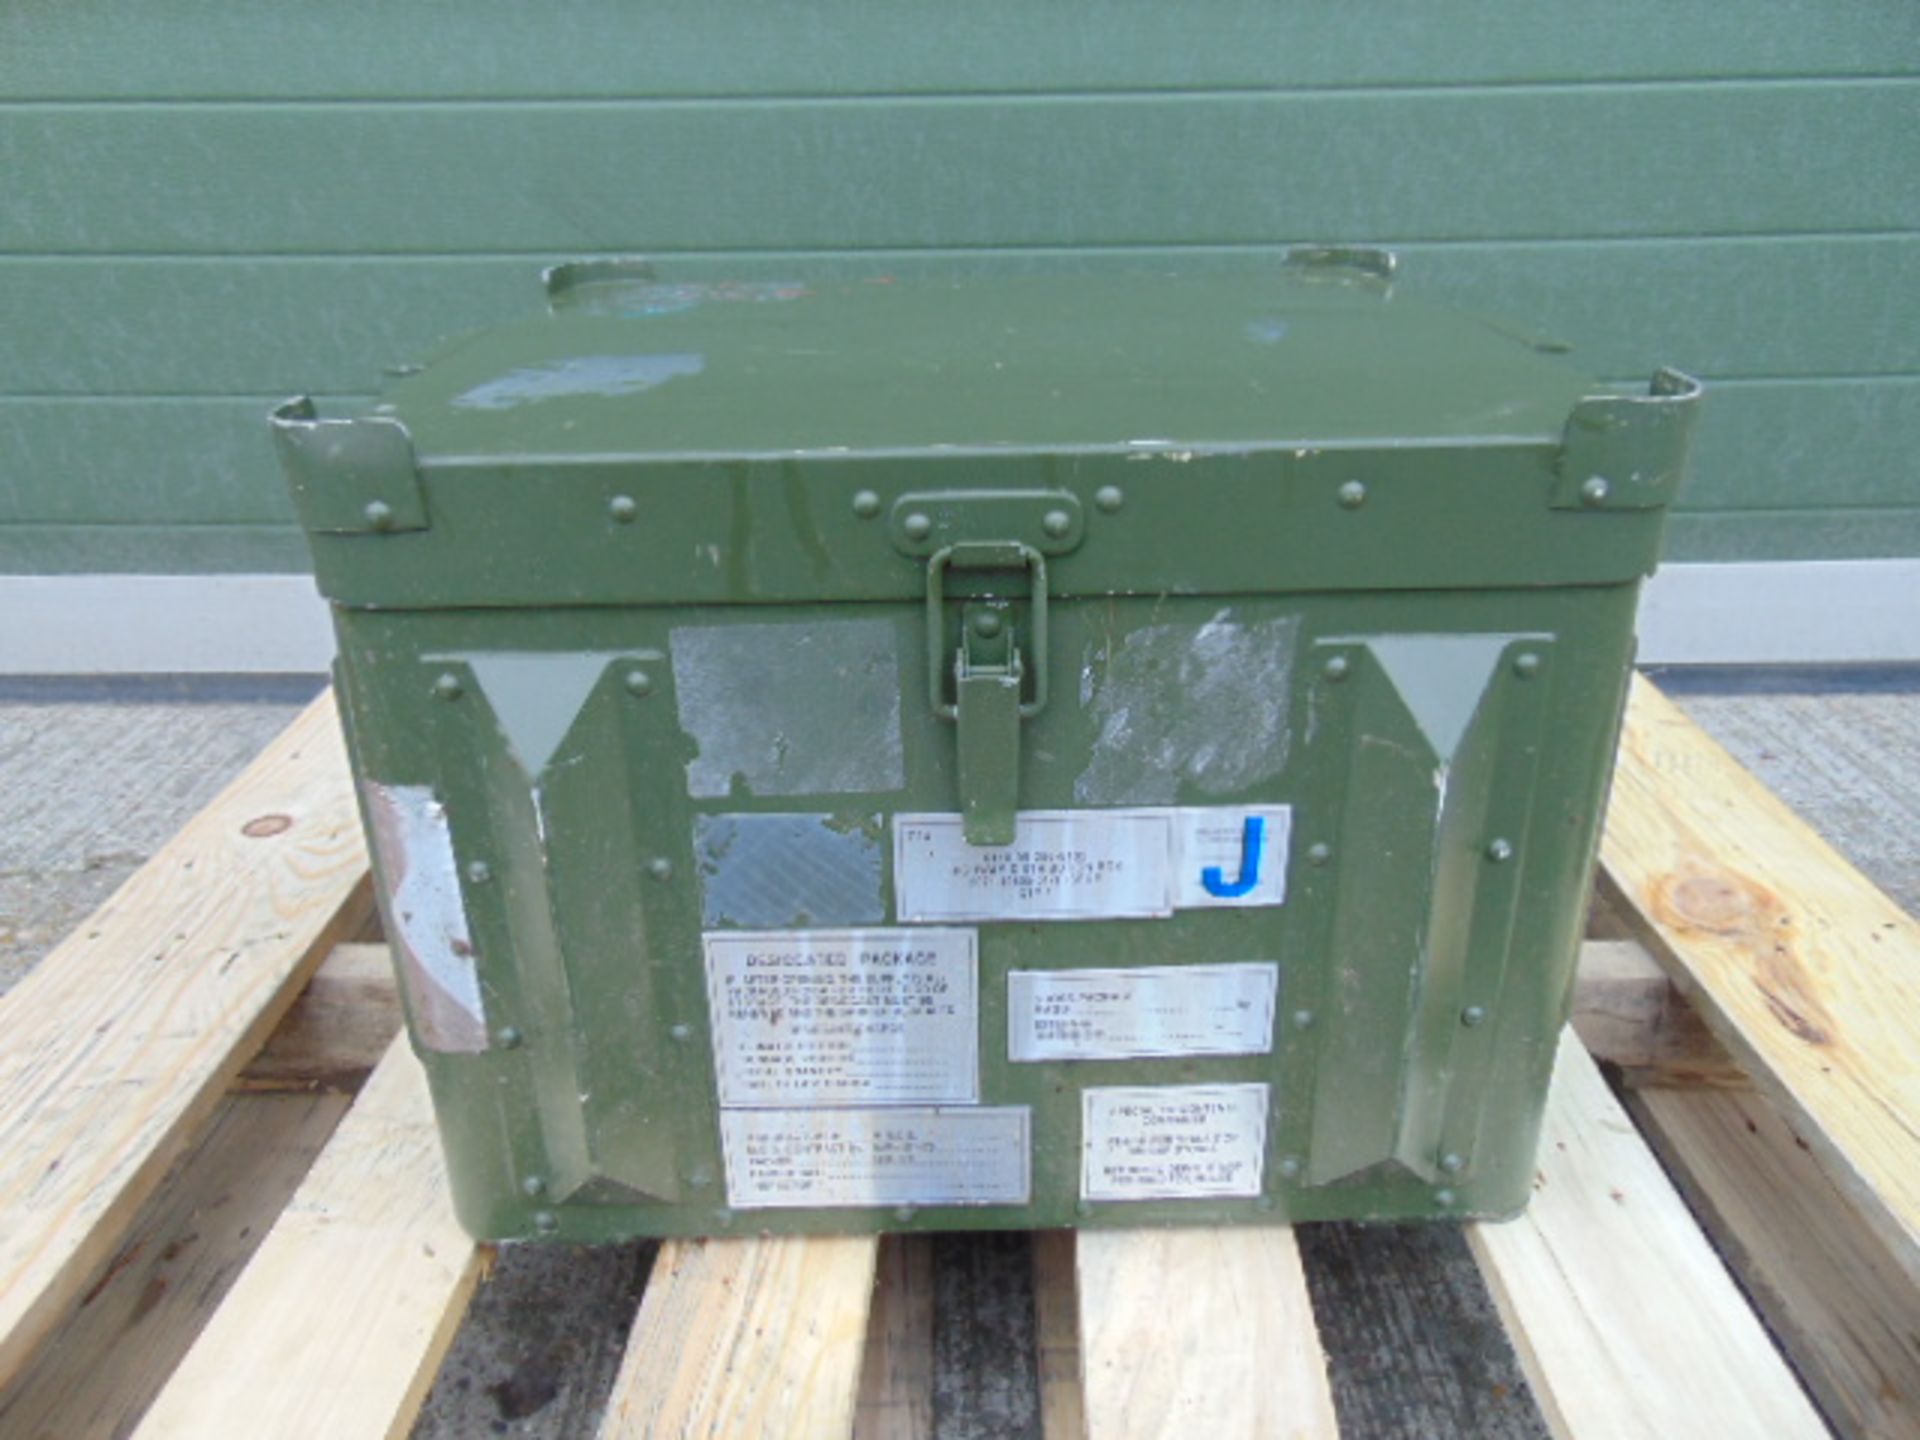 Heavy Duty Aluminium Waterproof Secure Storage Box as shown